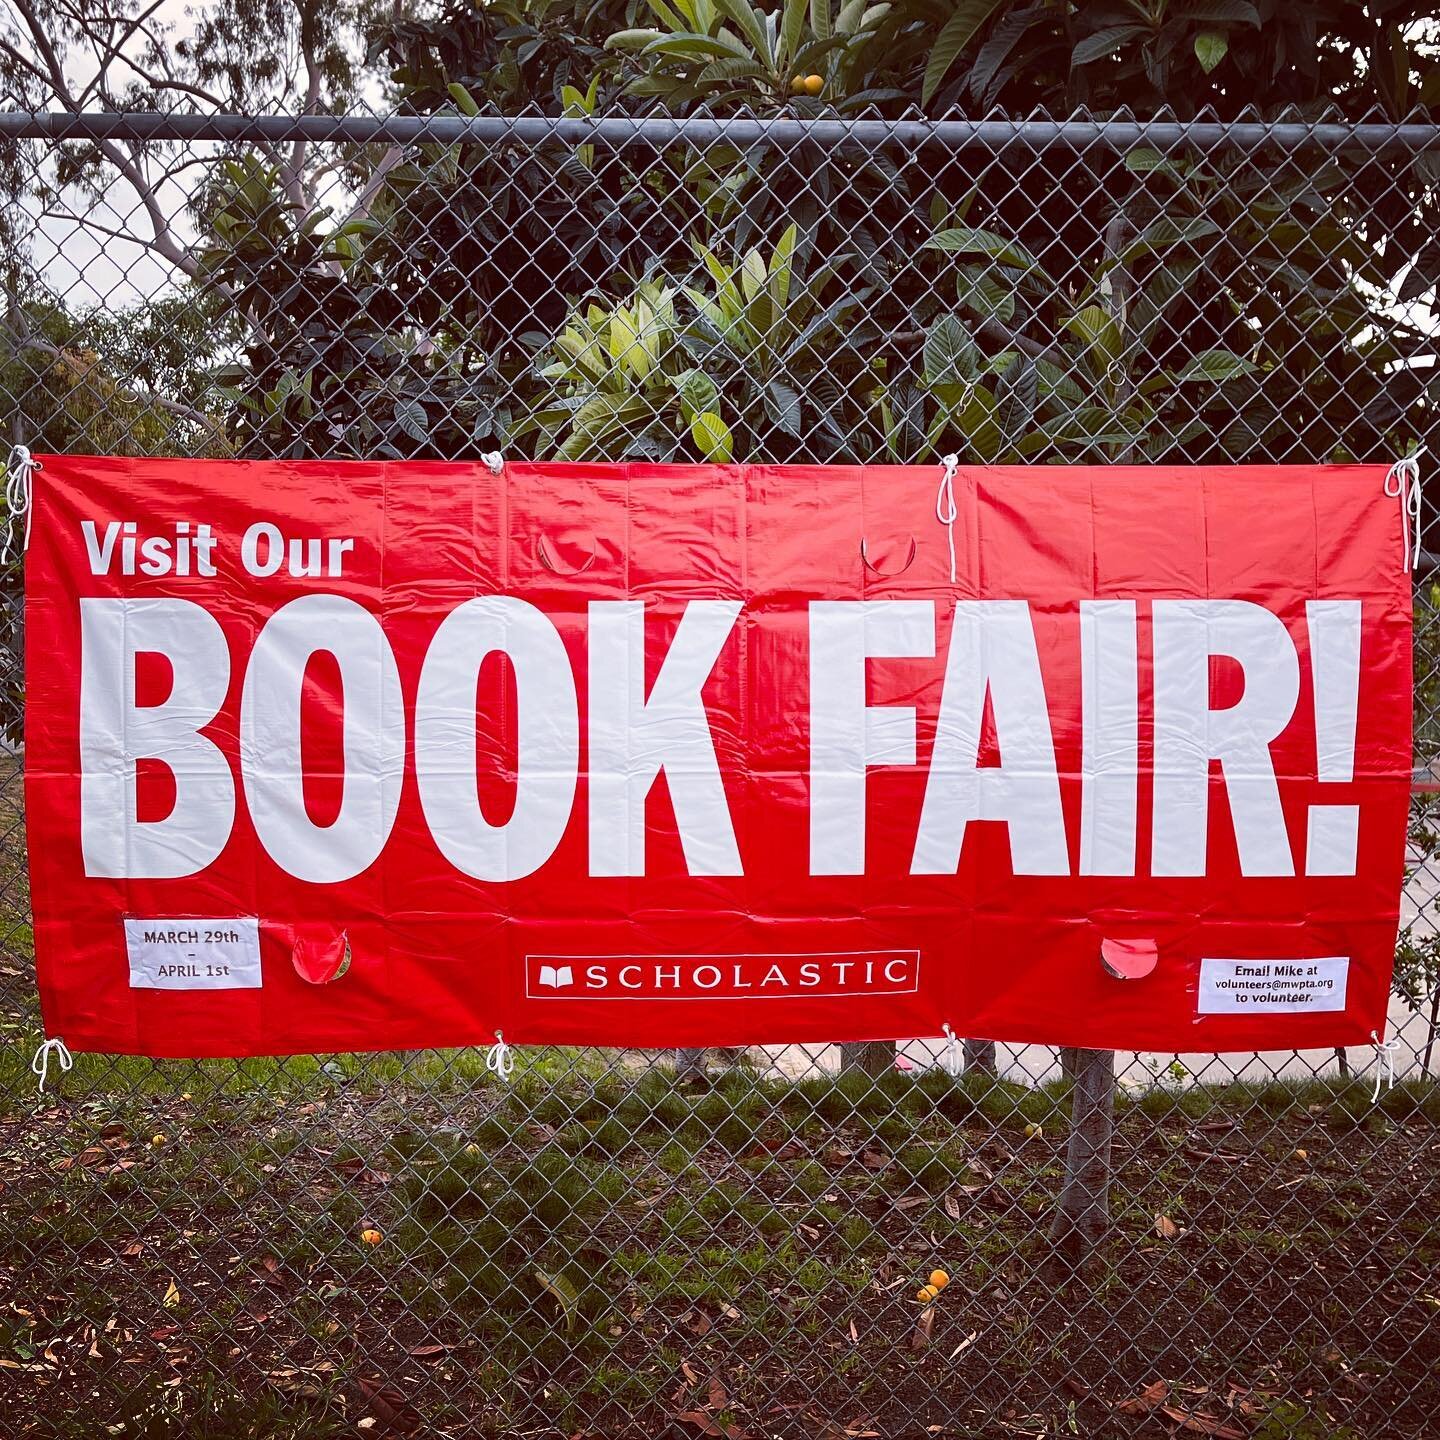 scholastic book fair still kicking 🙏
📚
📚
📚
📚
#book #bookfair #bookstagram #thatbook #thatbookpod #reading #read #reader #library #librarylove #podcast #books